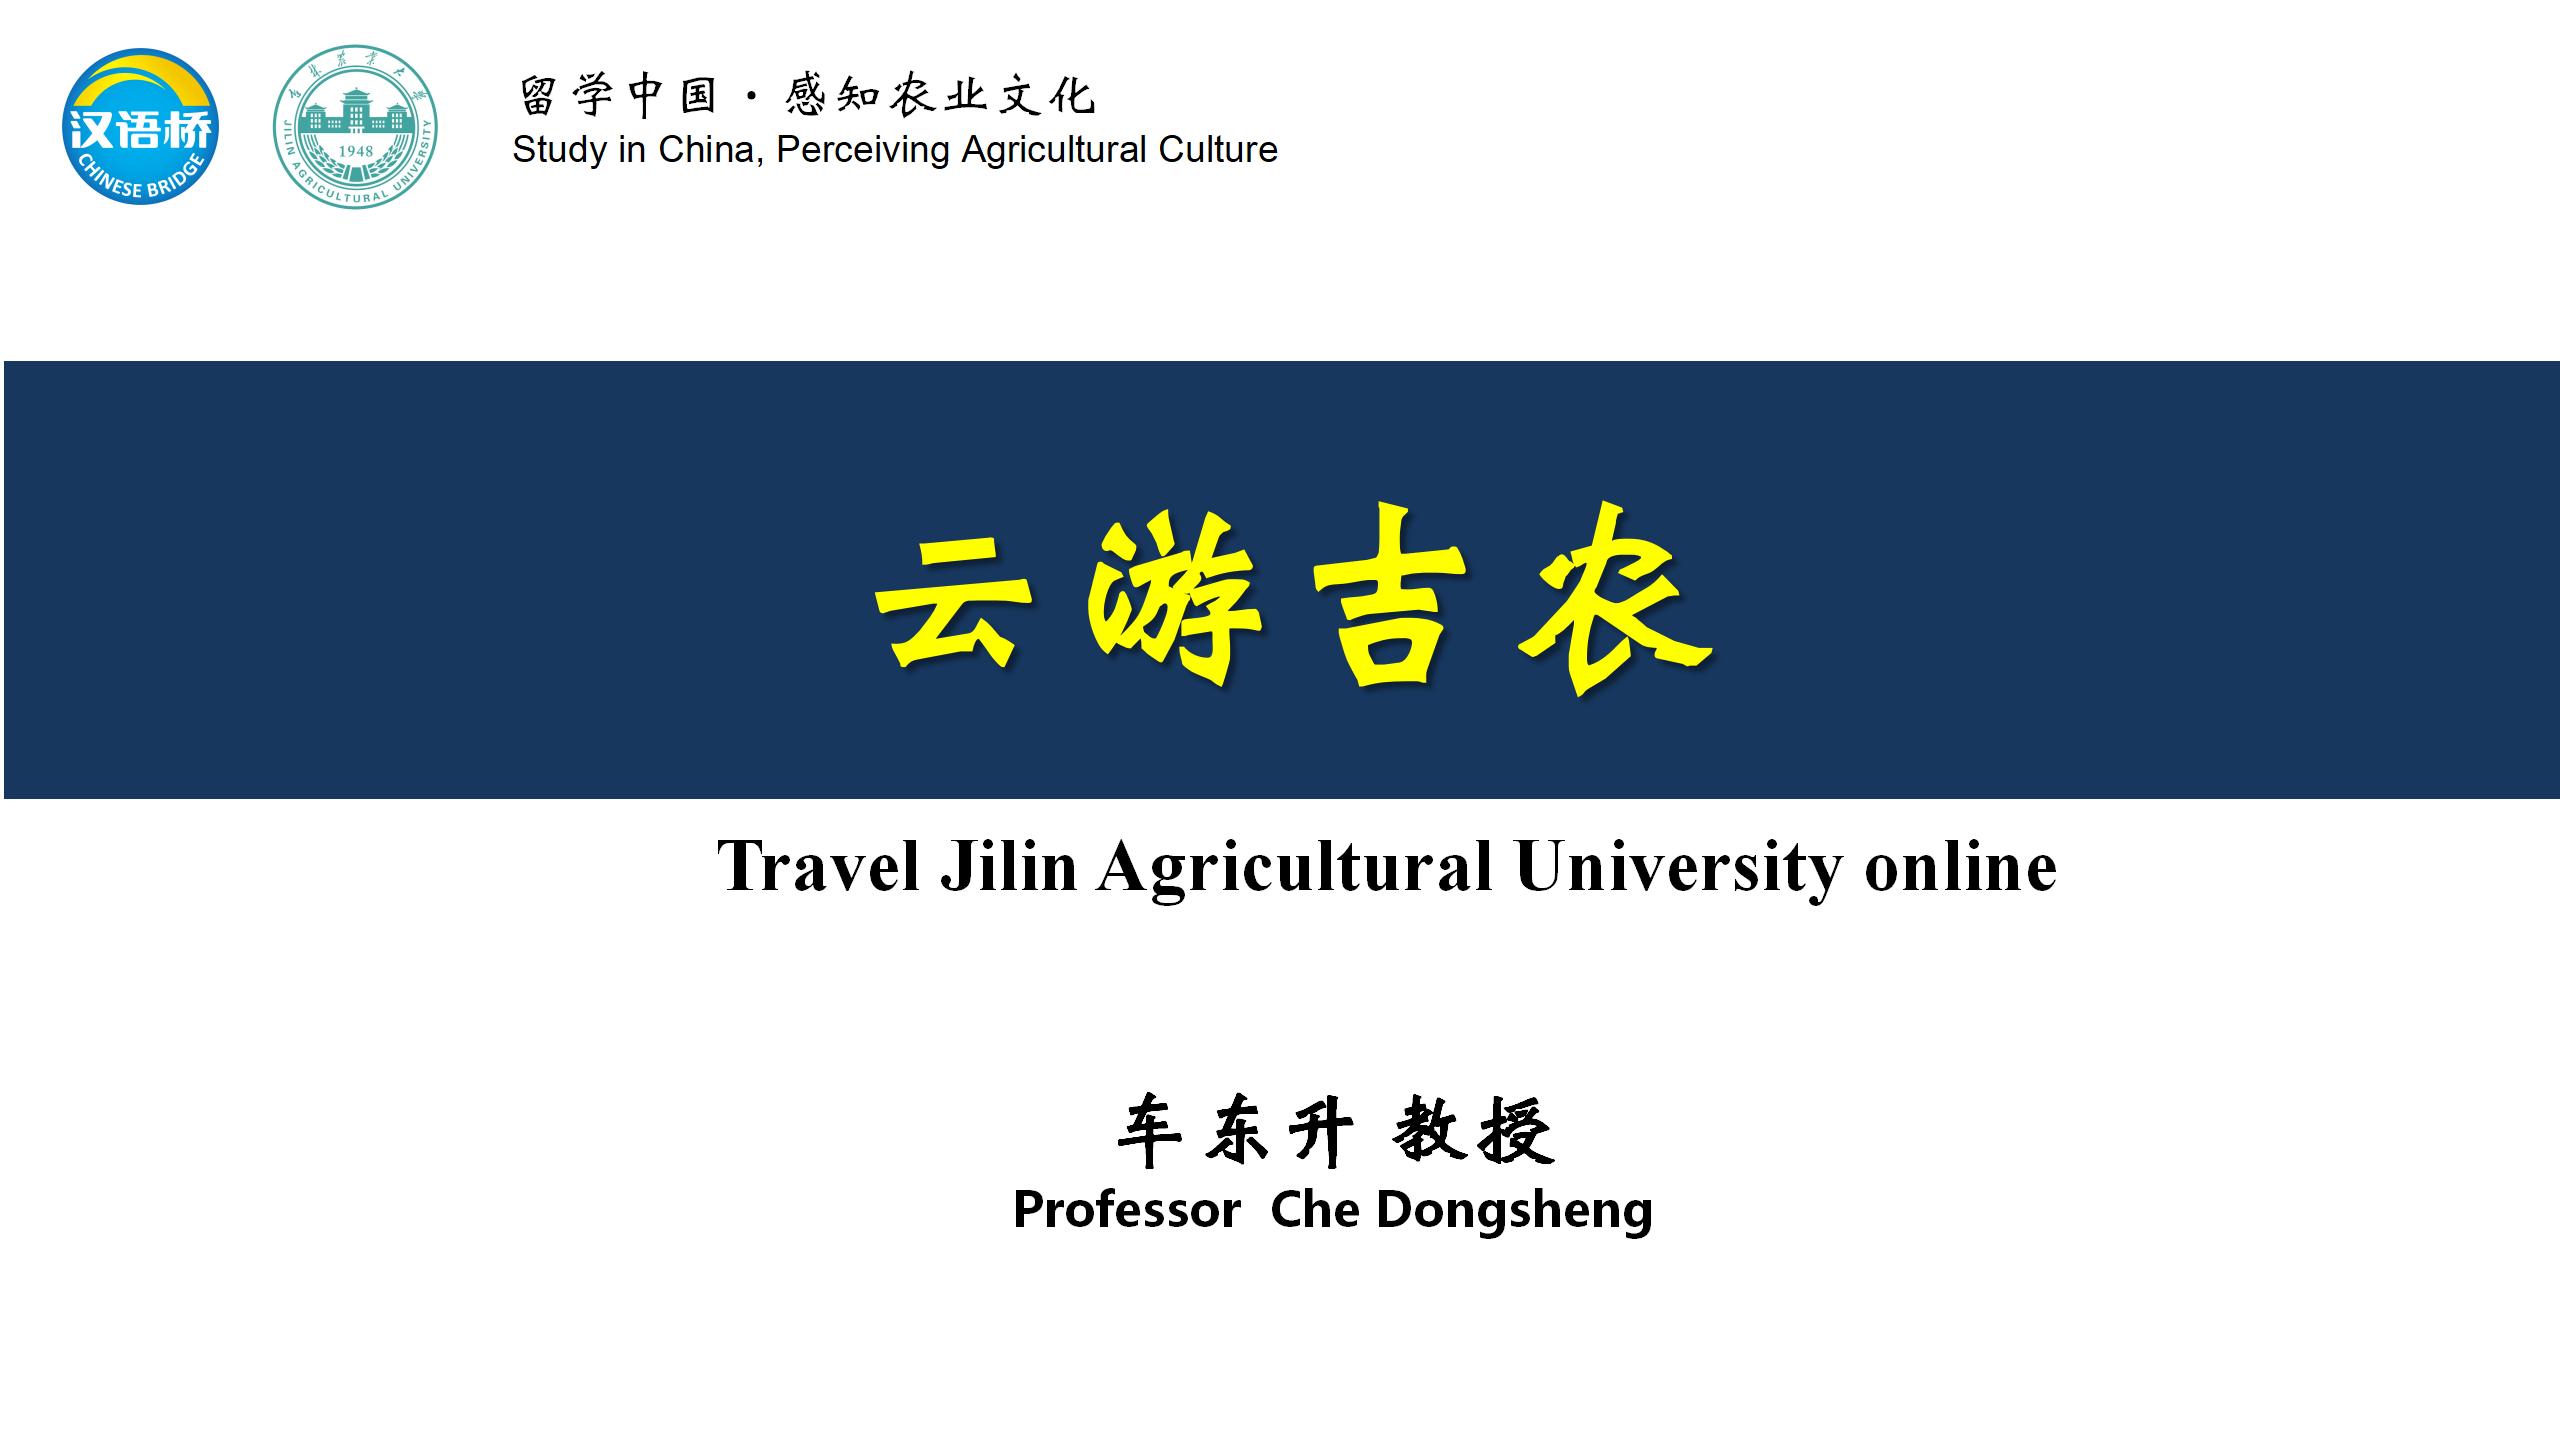 Travel Jilin Agricultural University online